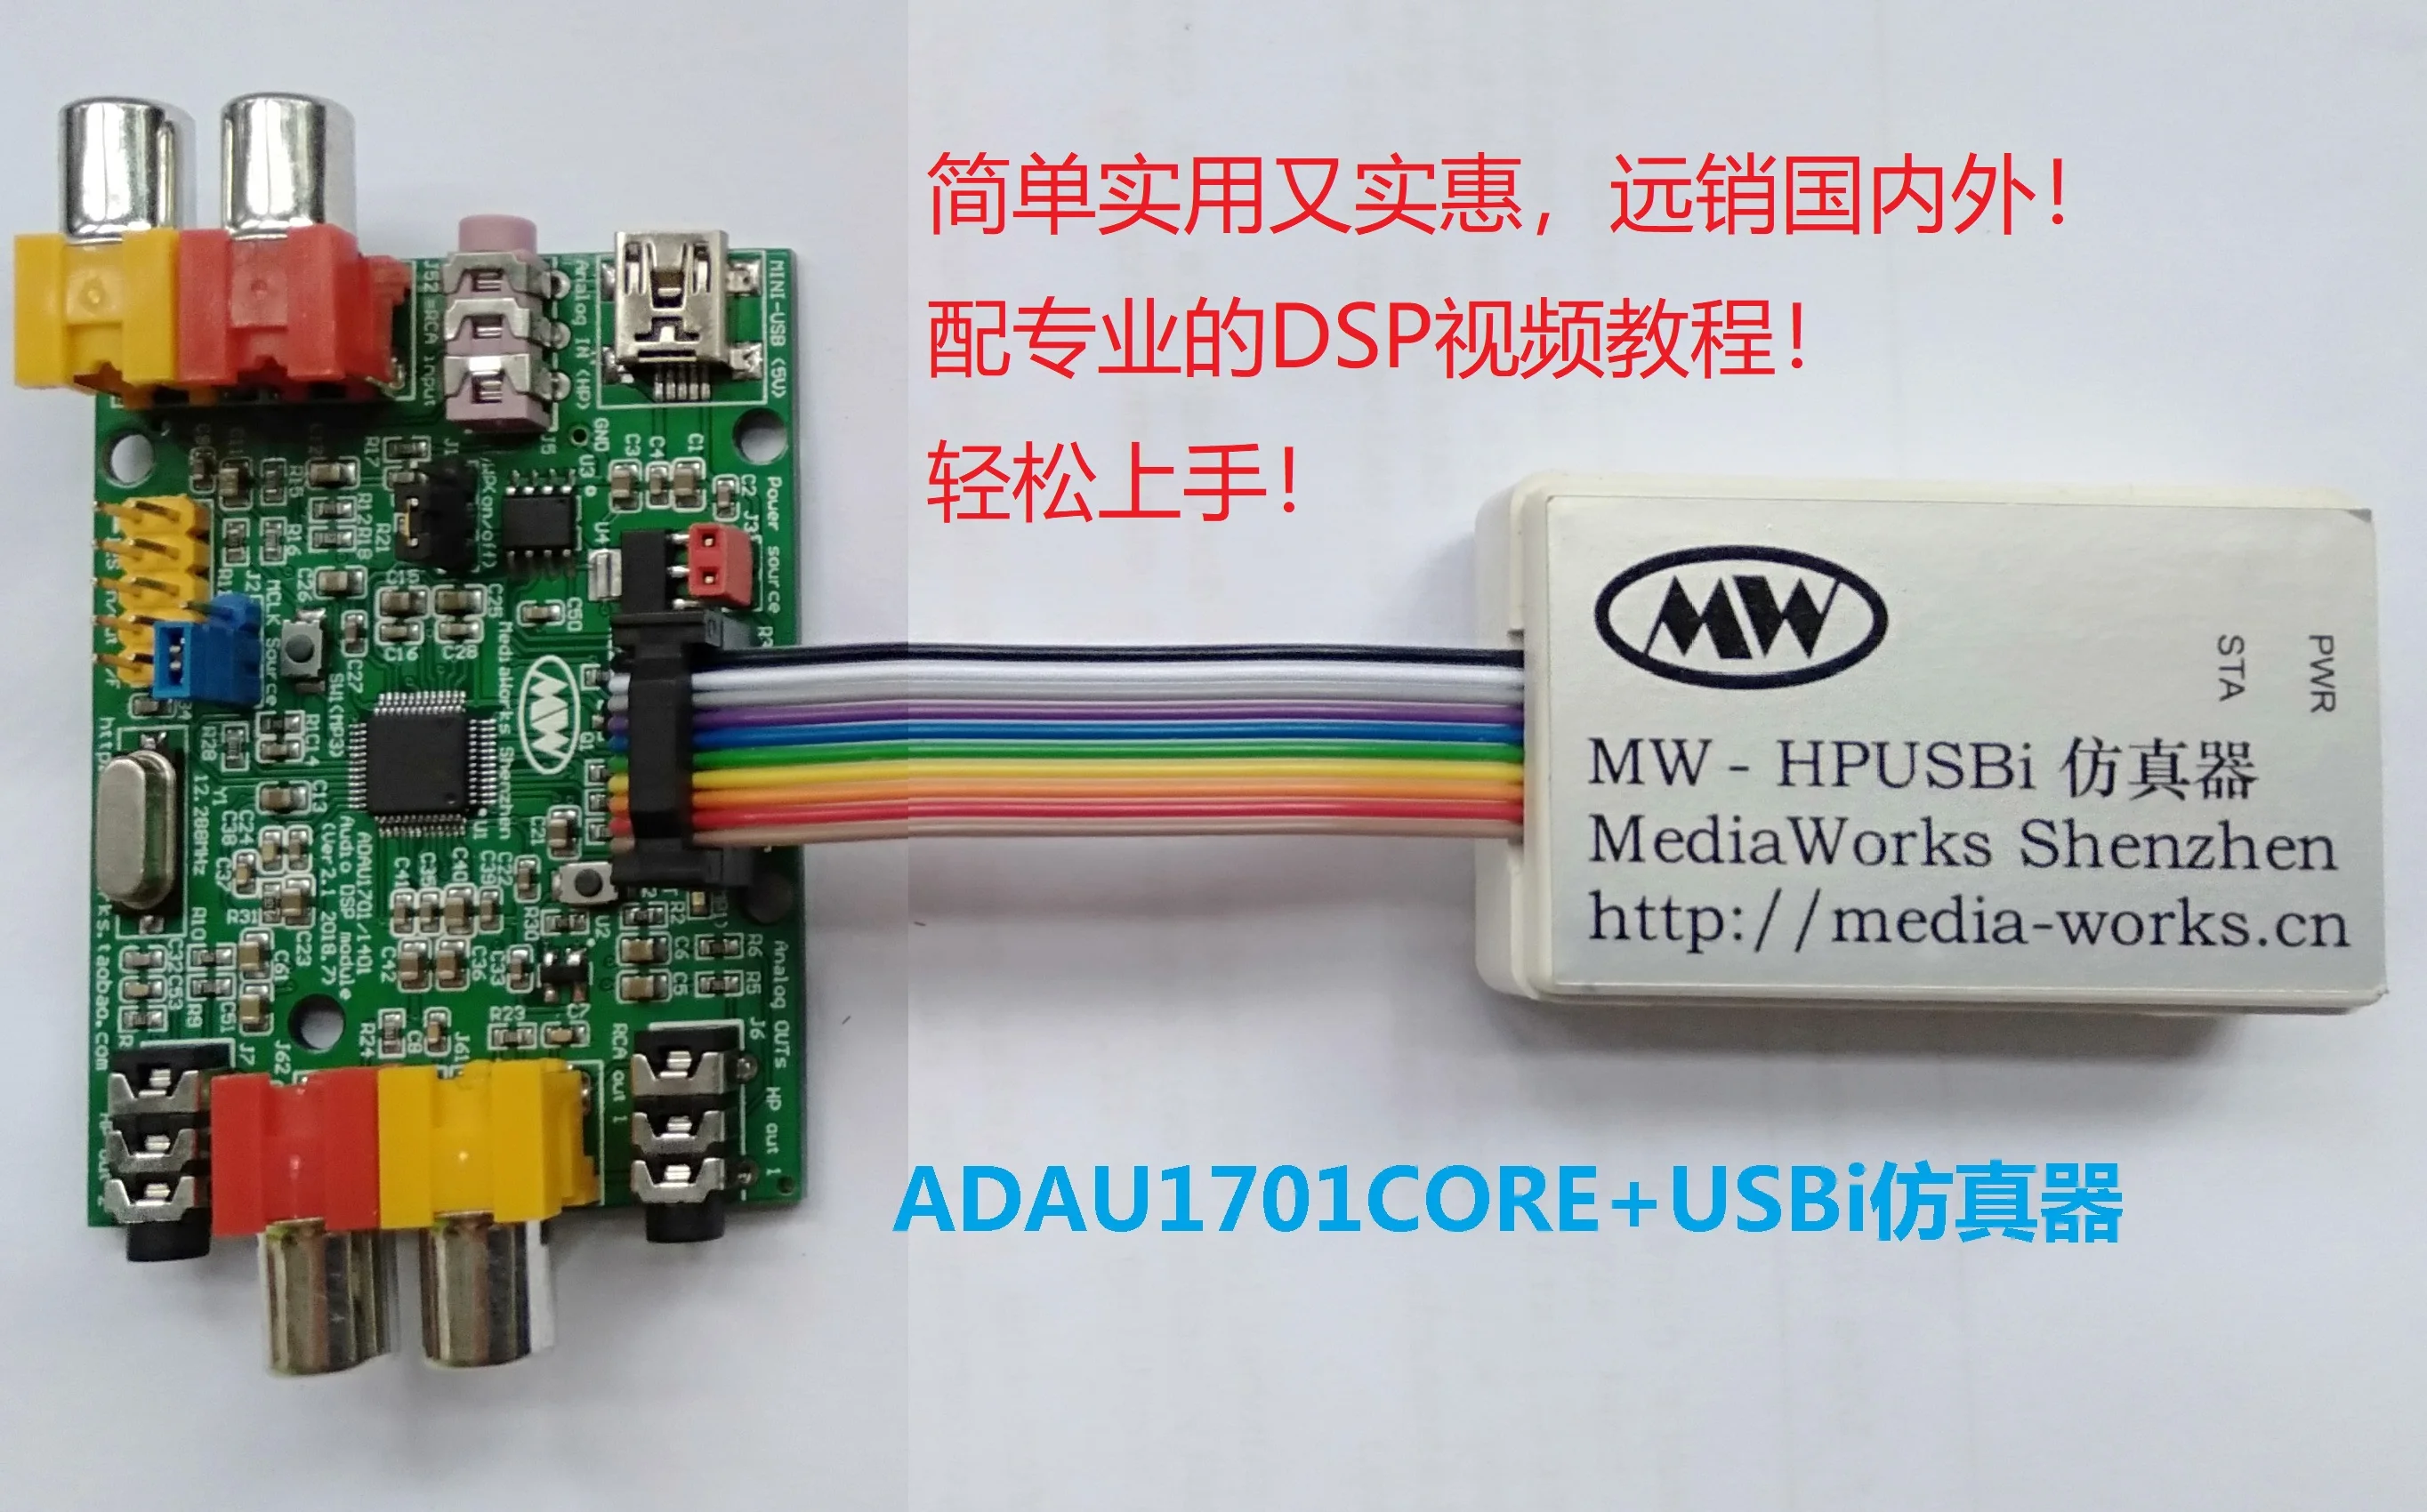 

Simple ADAU1701 Development Kit (including USBi)